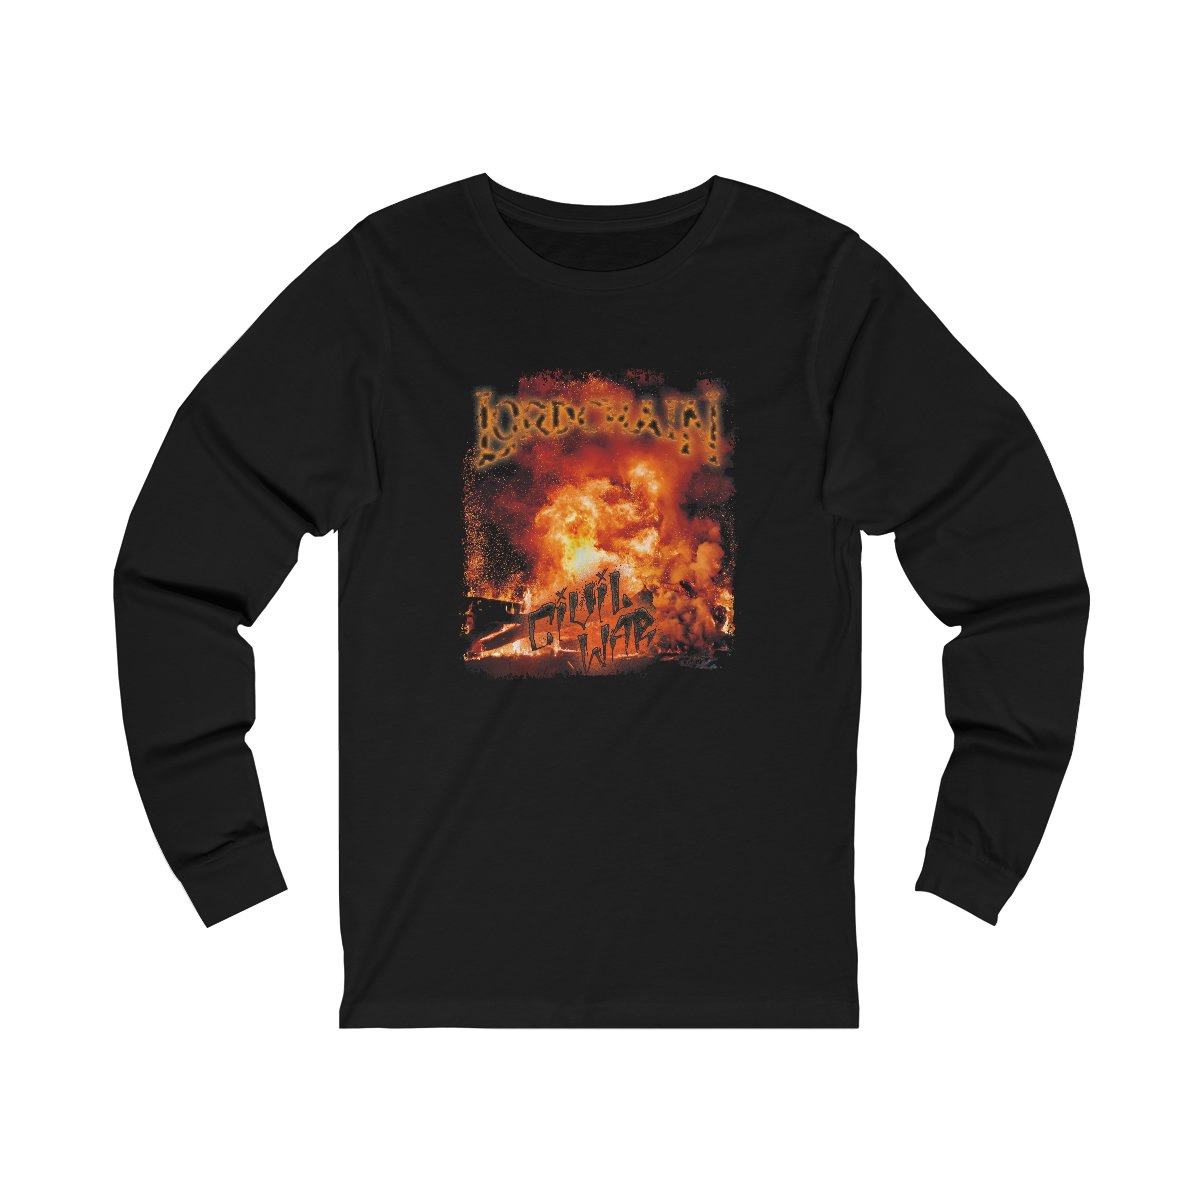 Lordchain – Civil War Long Sleeve Tshirt